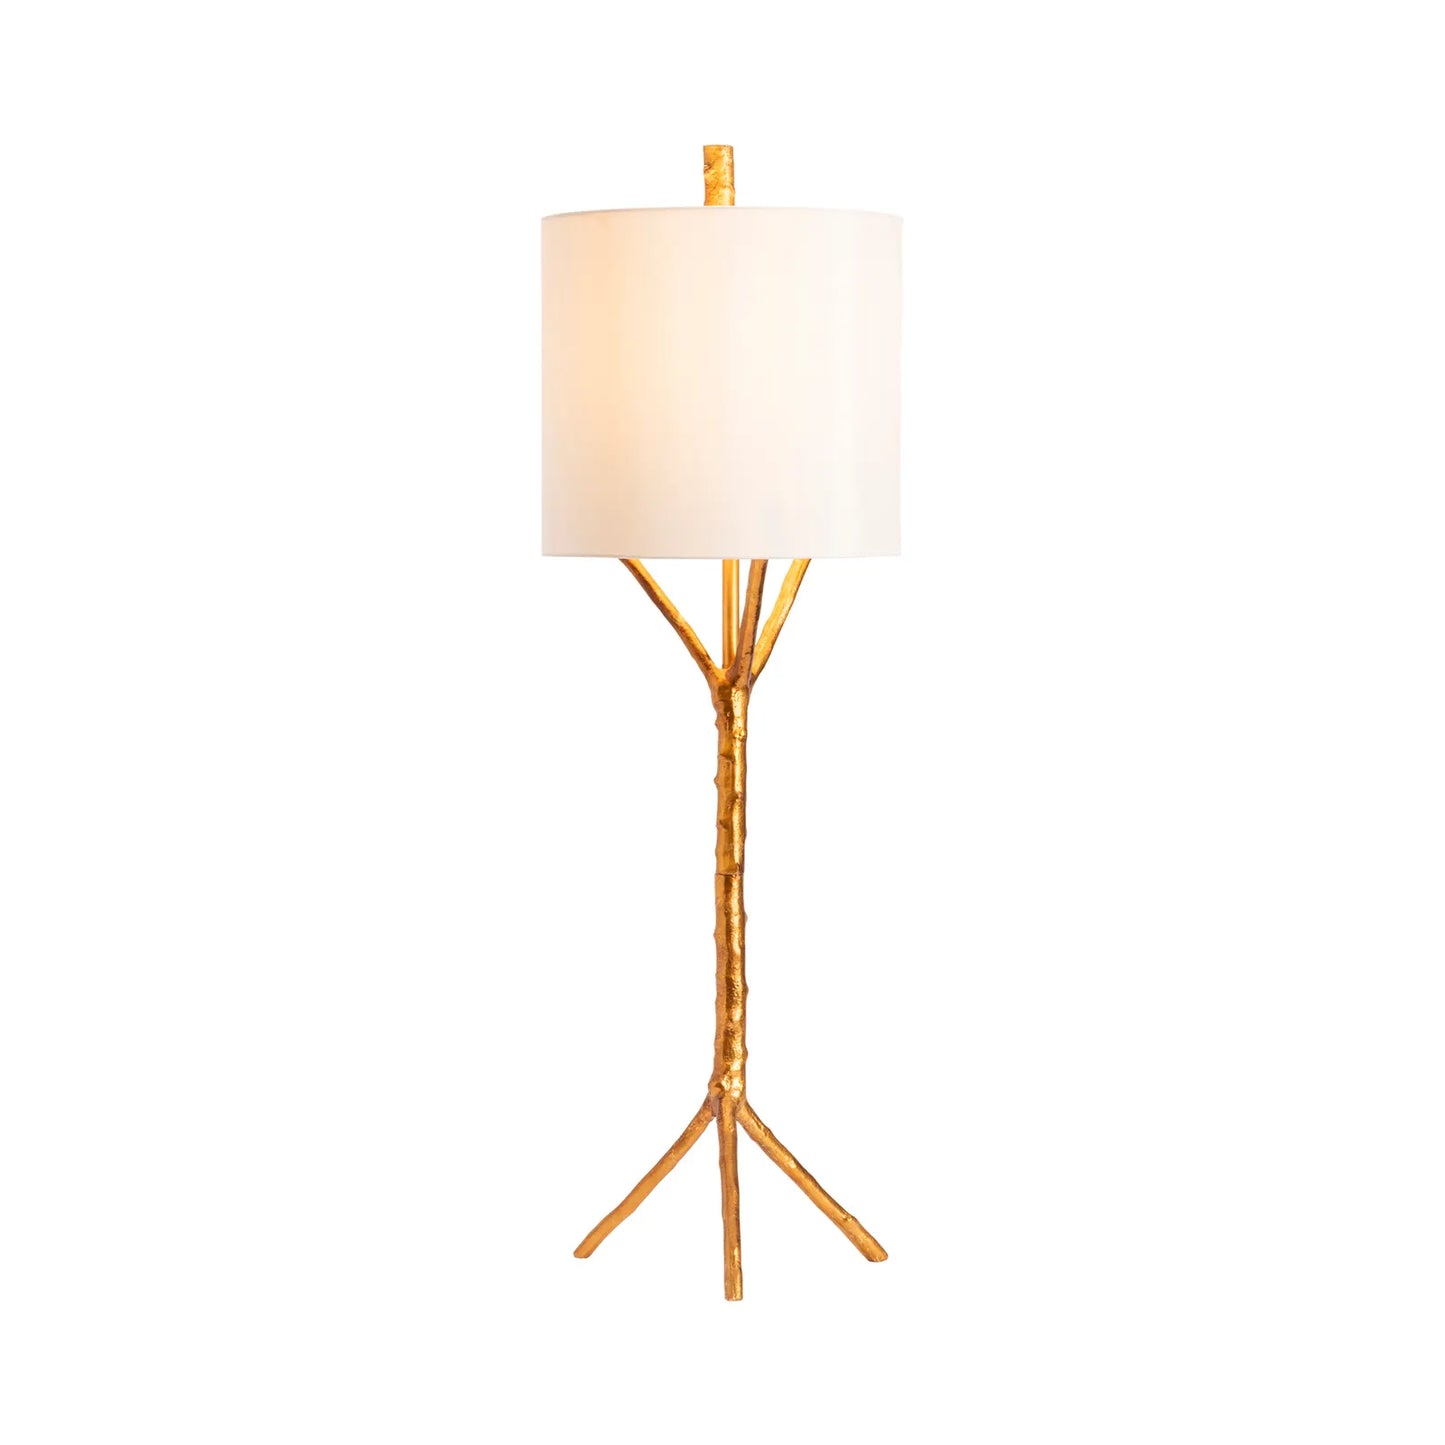 CVC Metal Tree Table Lamp